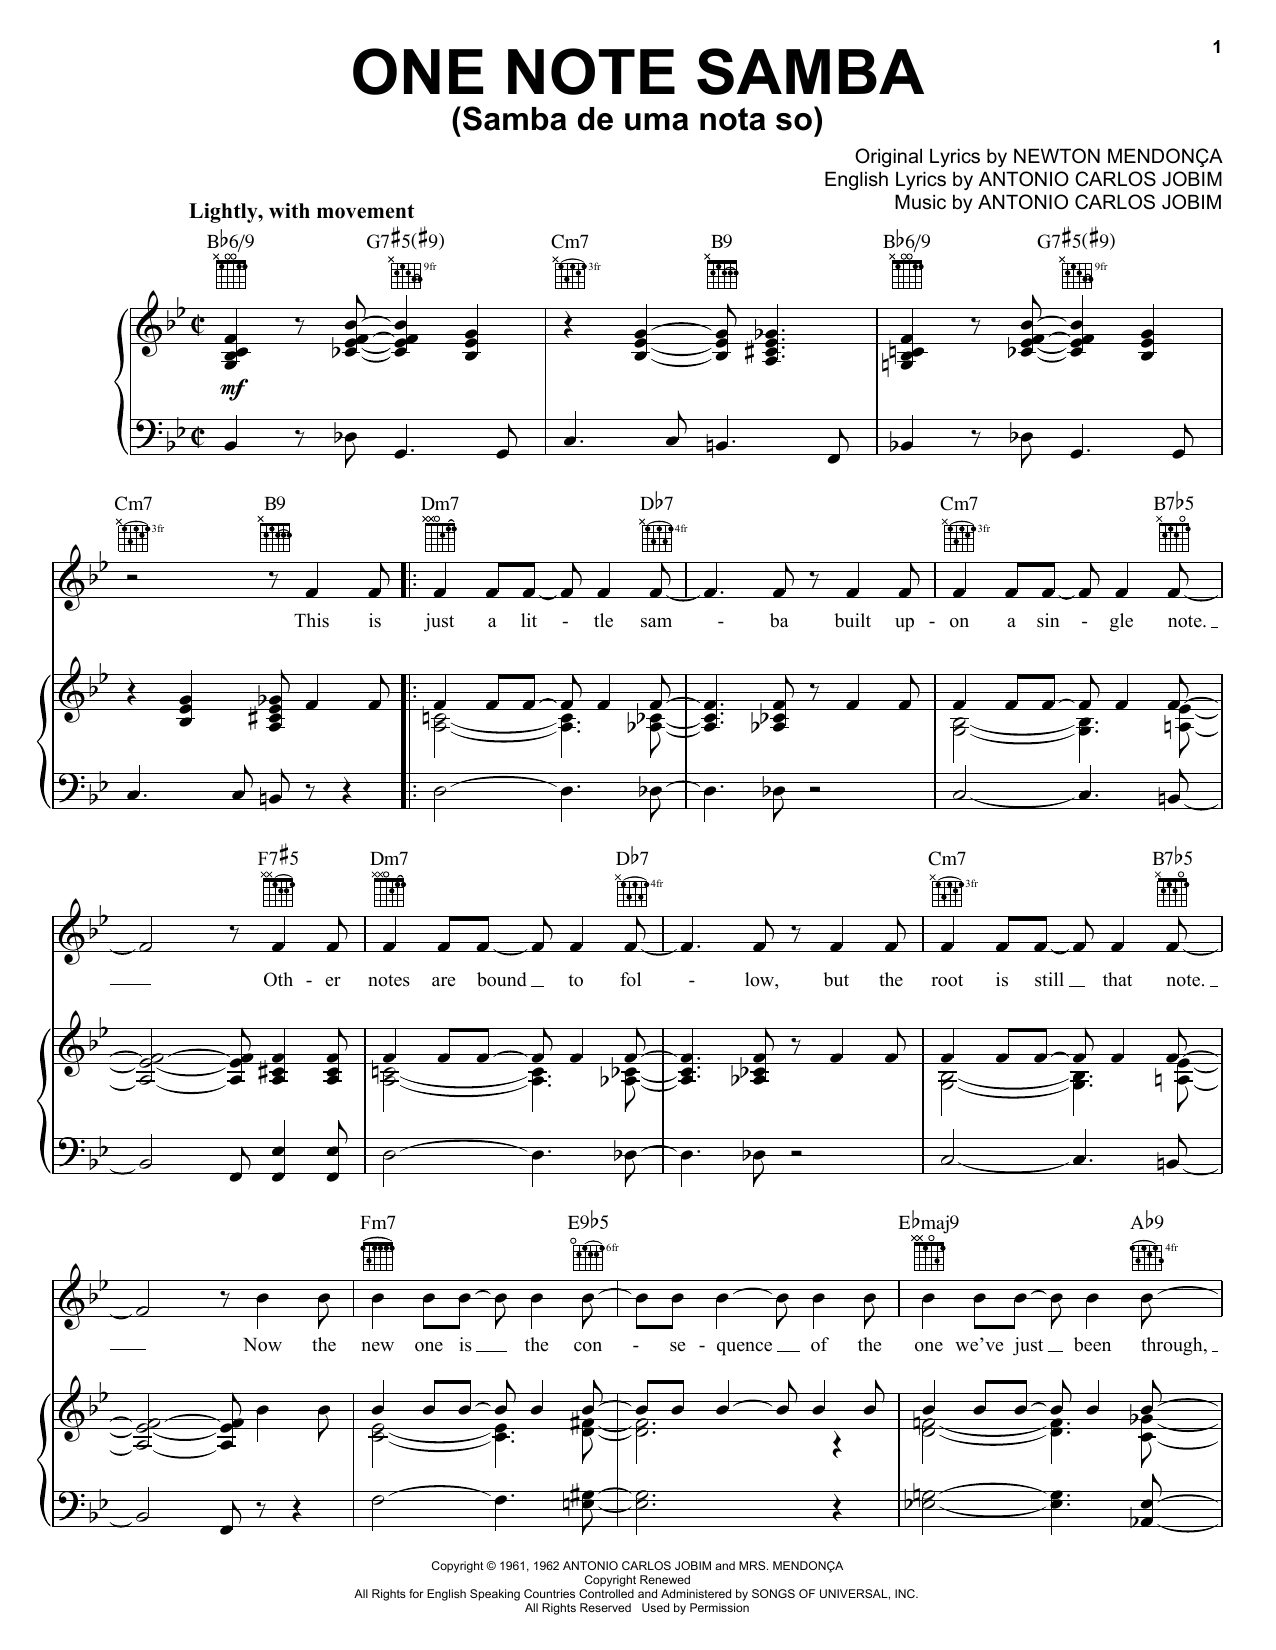 Download Antonio Carlos Jobim One Note Samba (Samba De Uma Nota So) Sheet Music and learn how to play Ukulele PDF digital score in minutes